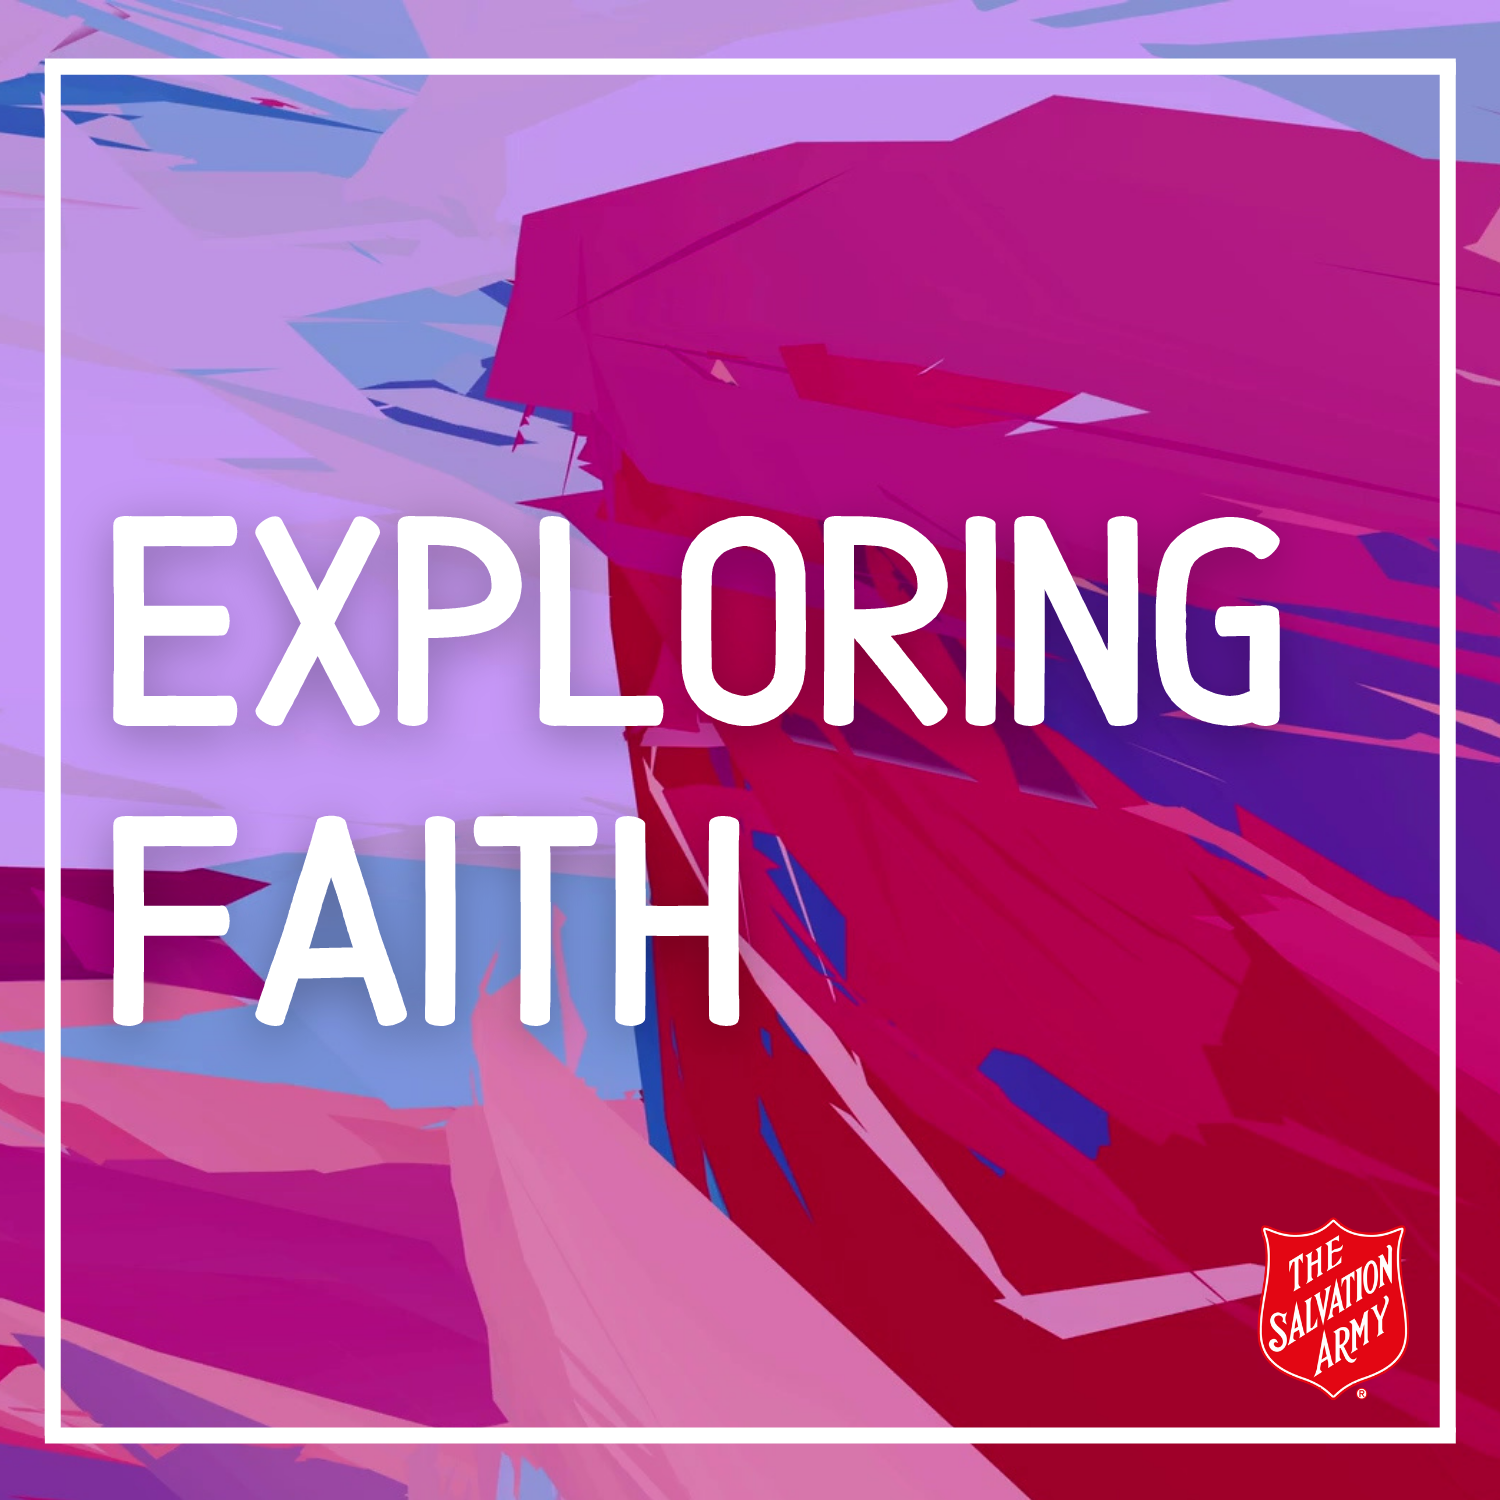 Exploring Faith - Morley Salvation Army